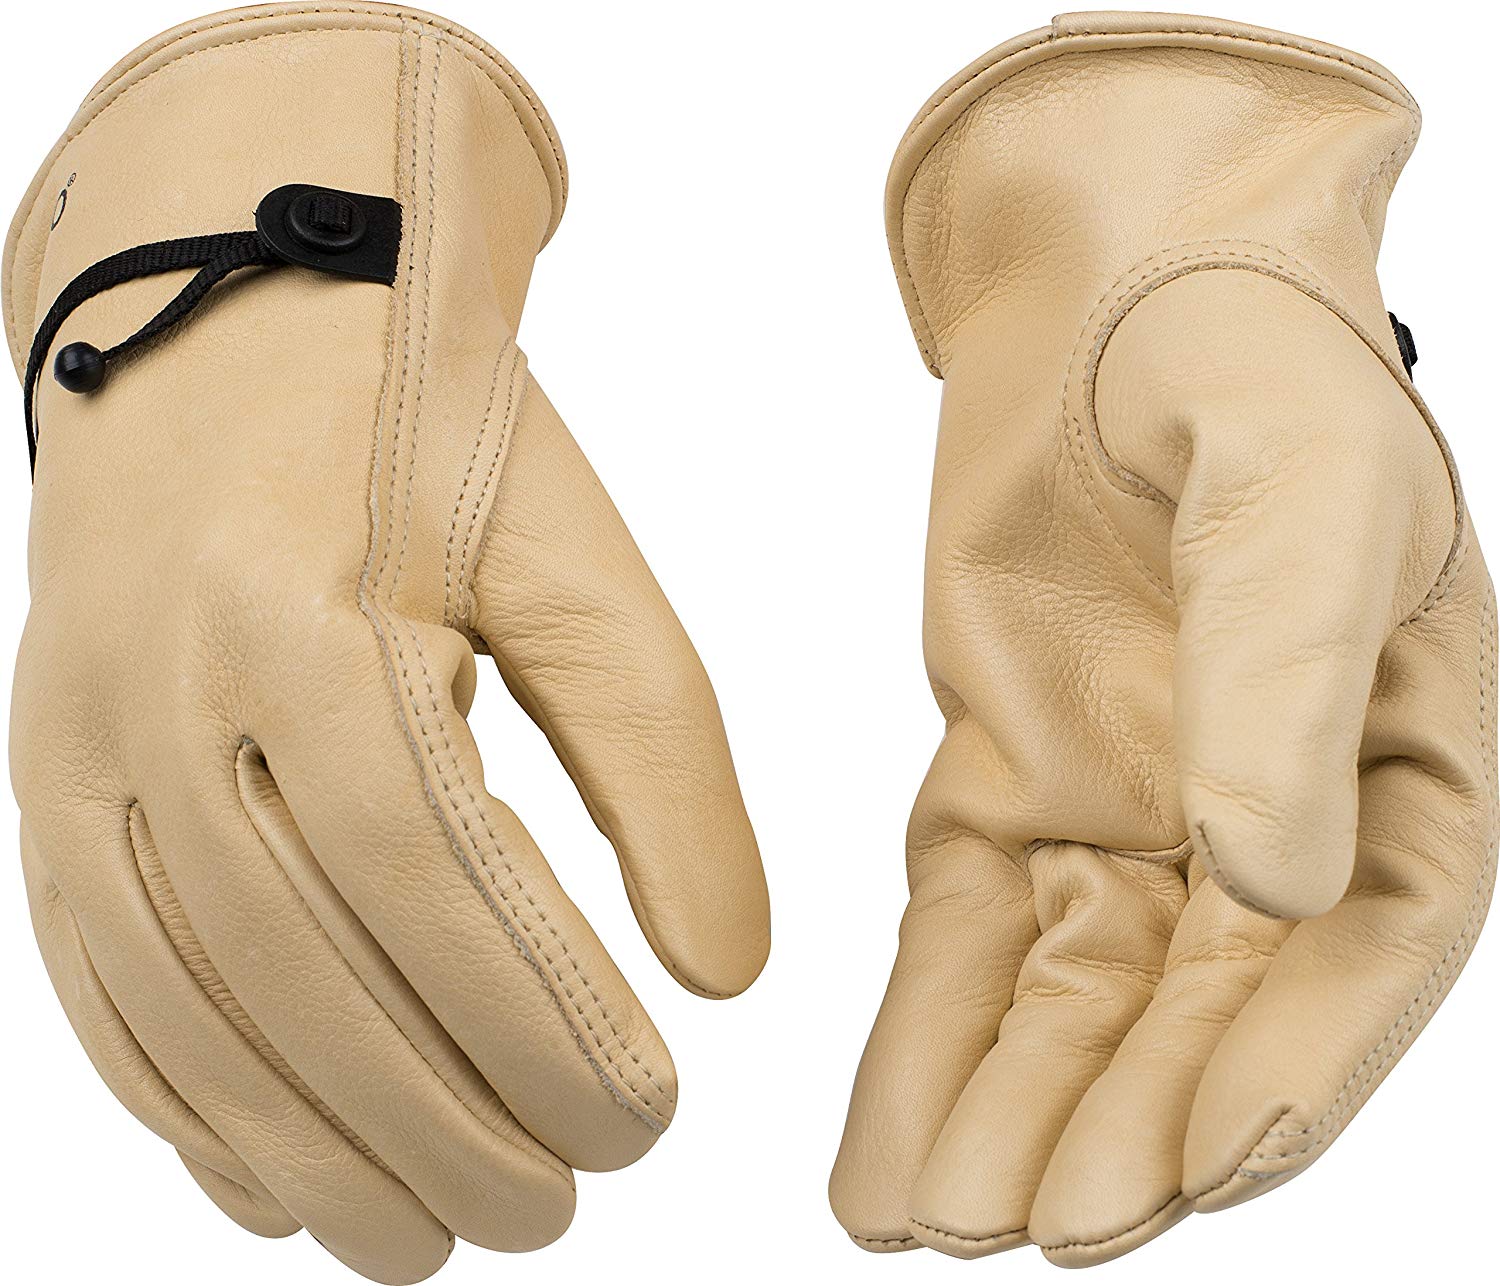 Pk Tillman 1427 Top Grain Cowhide Drivers Gloves w/Orange Tips Large